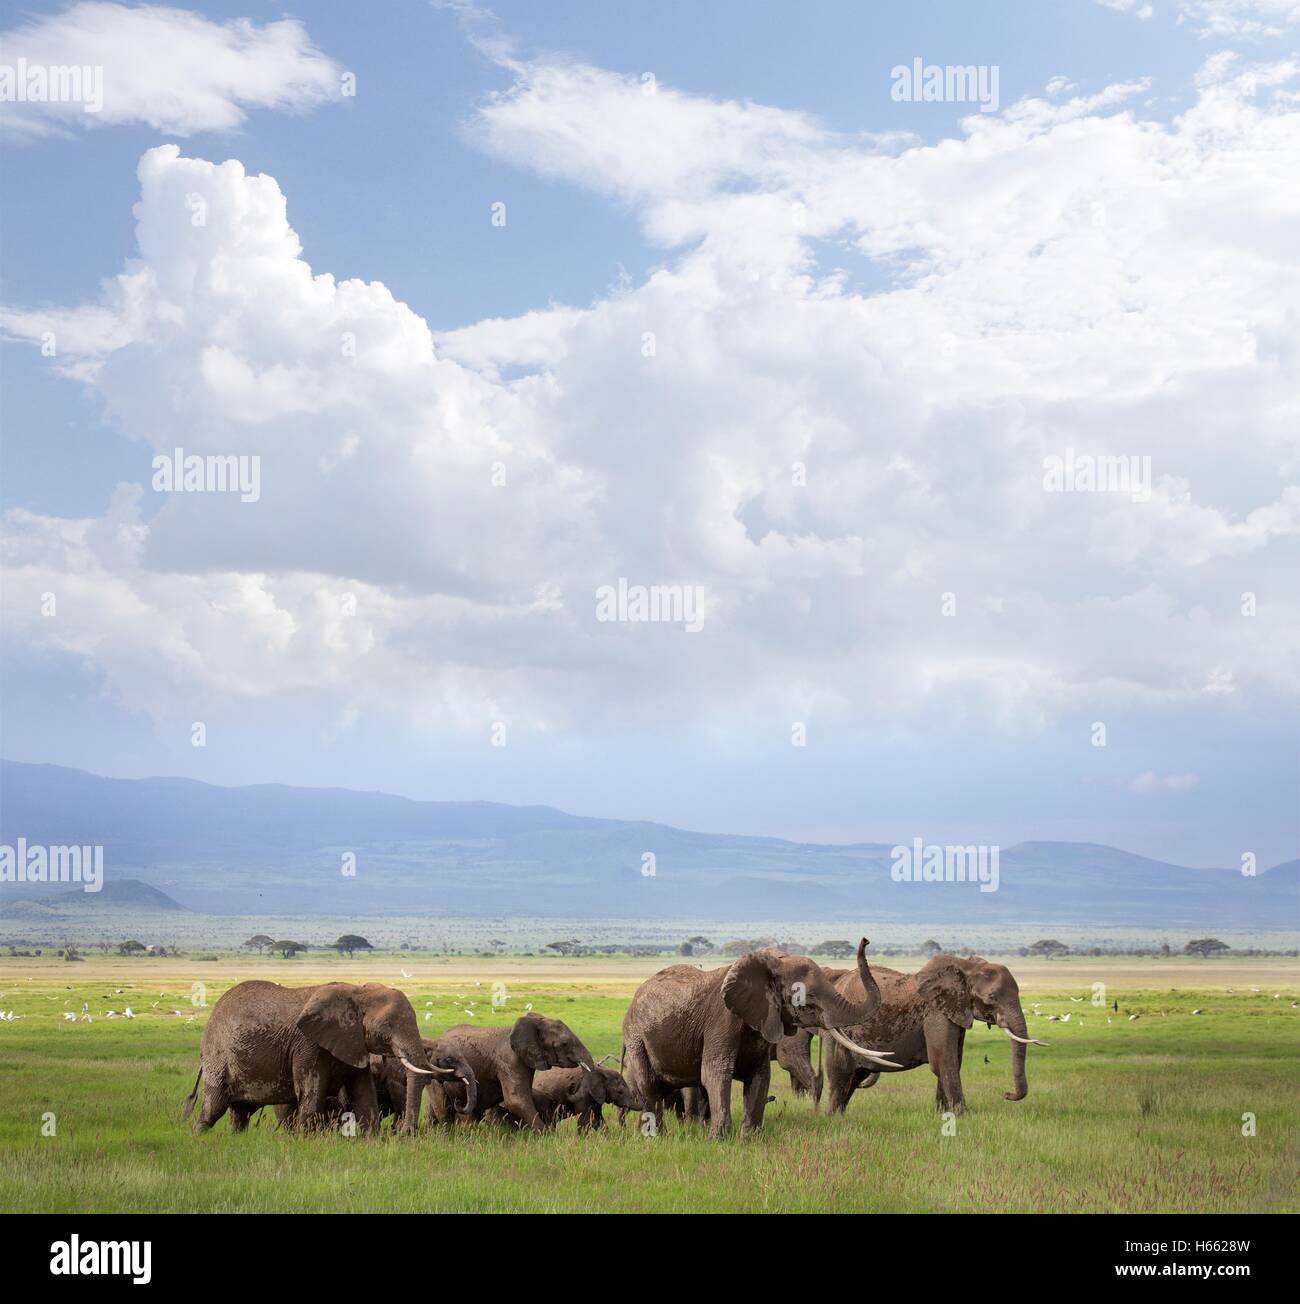 On safari in Amboseli National Park, Kenya. Stock Photo